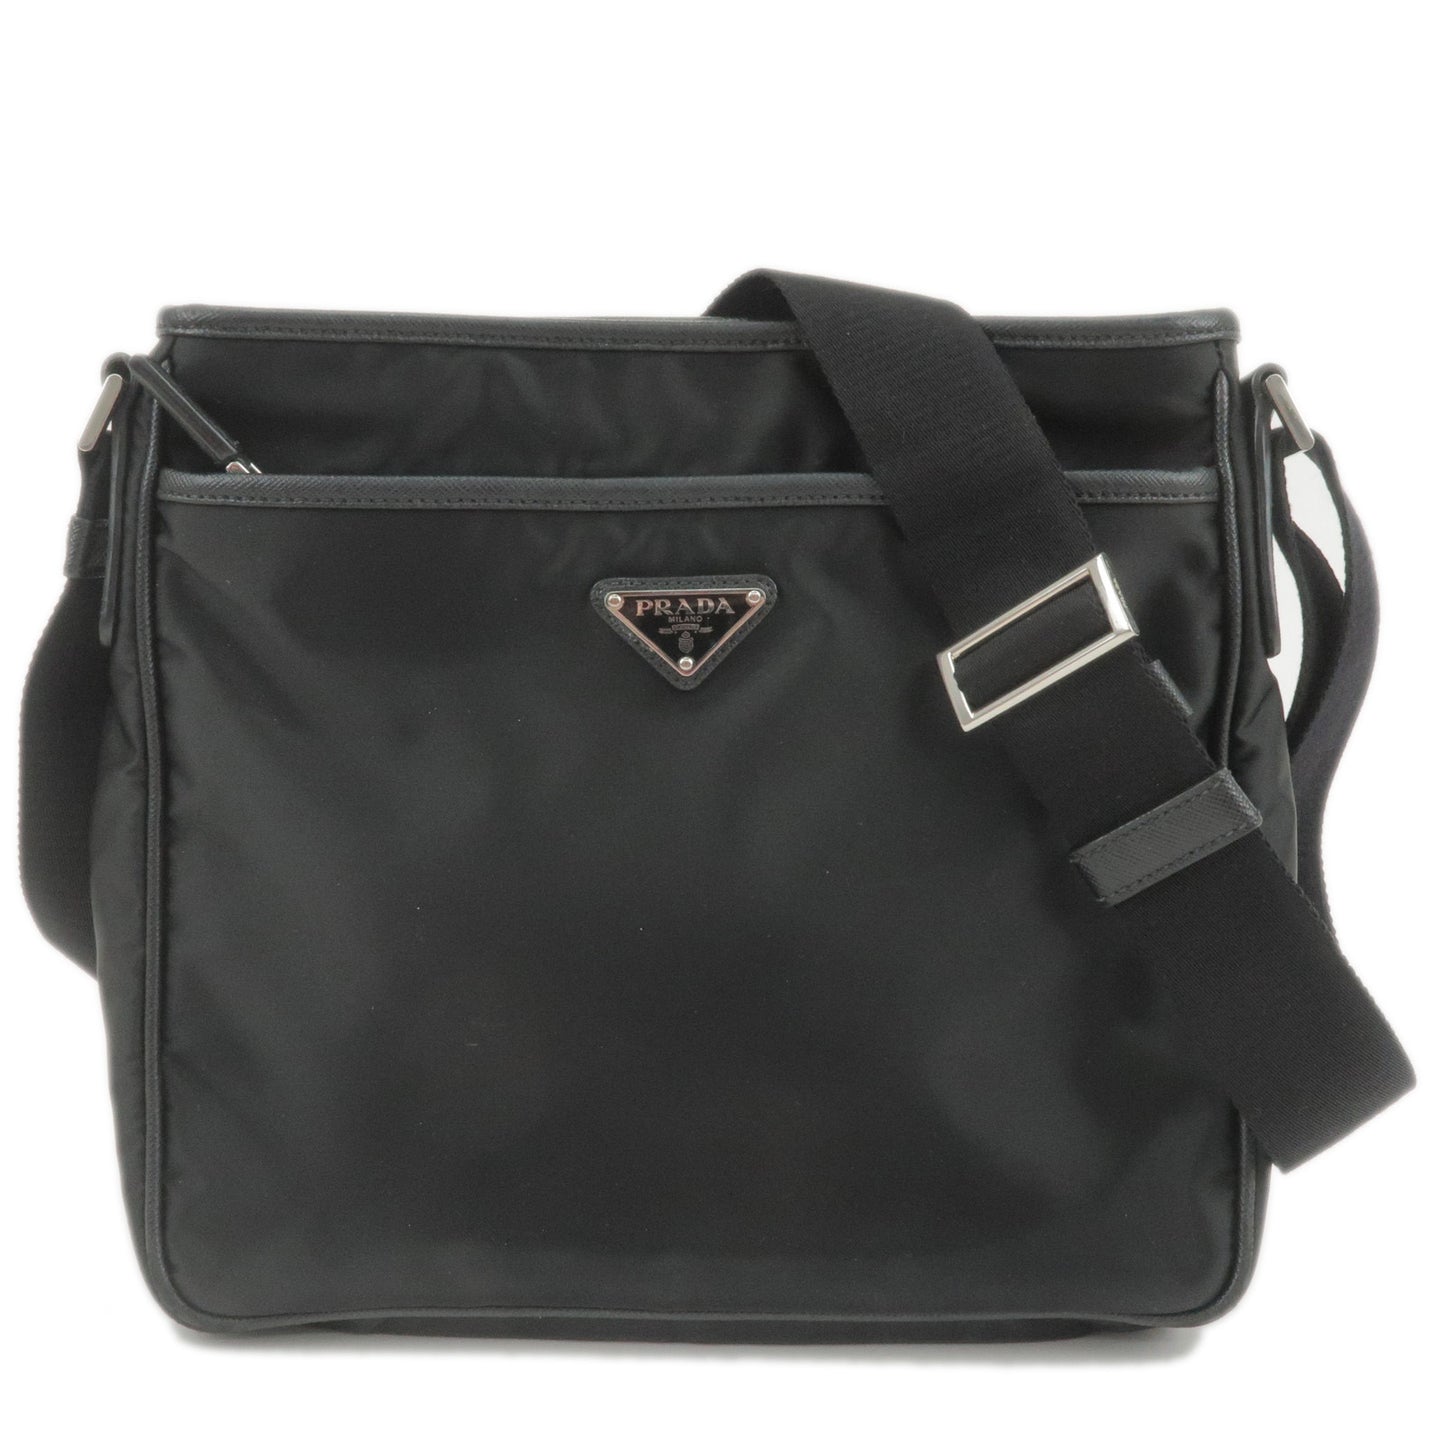 PRADA-Nylon-Leather-Shoulder-Bag-NERO-Black-2VH797